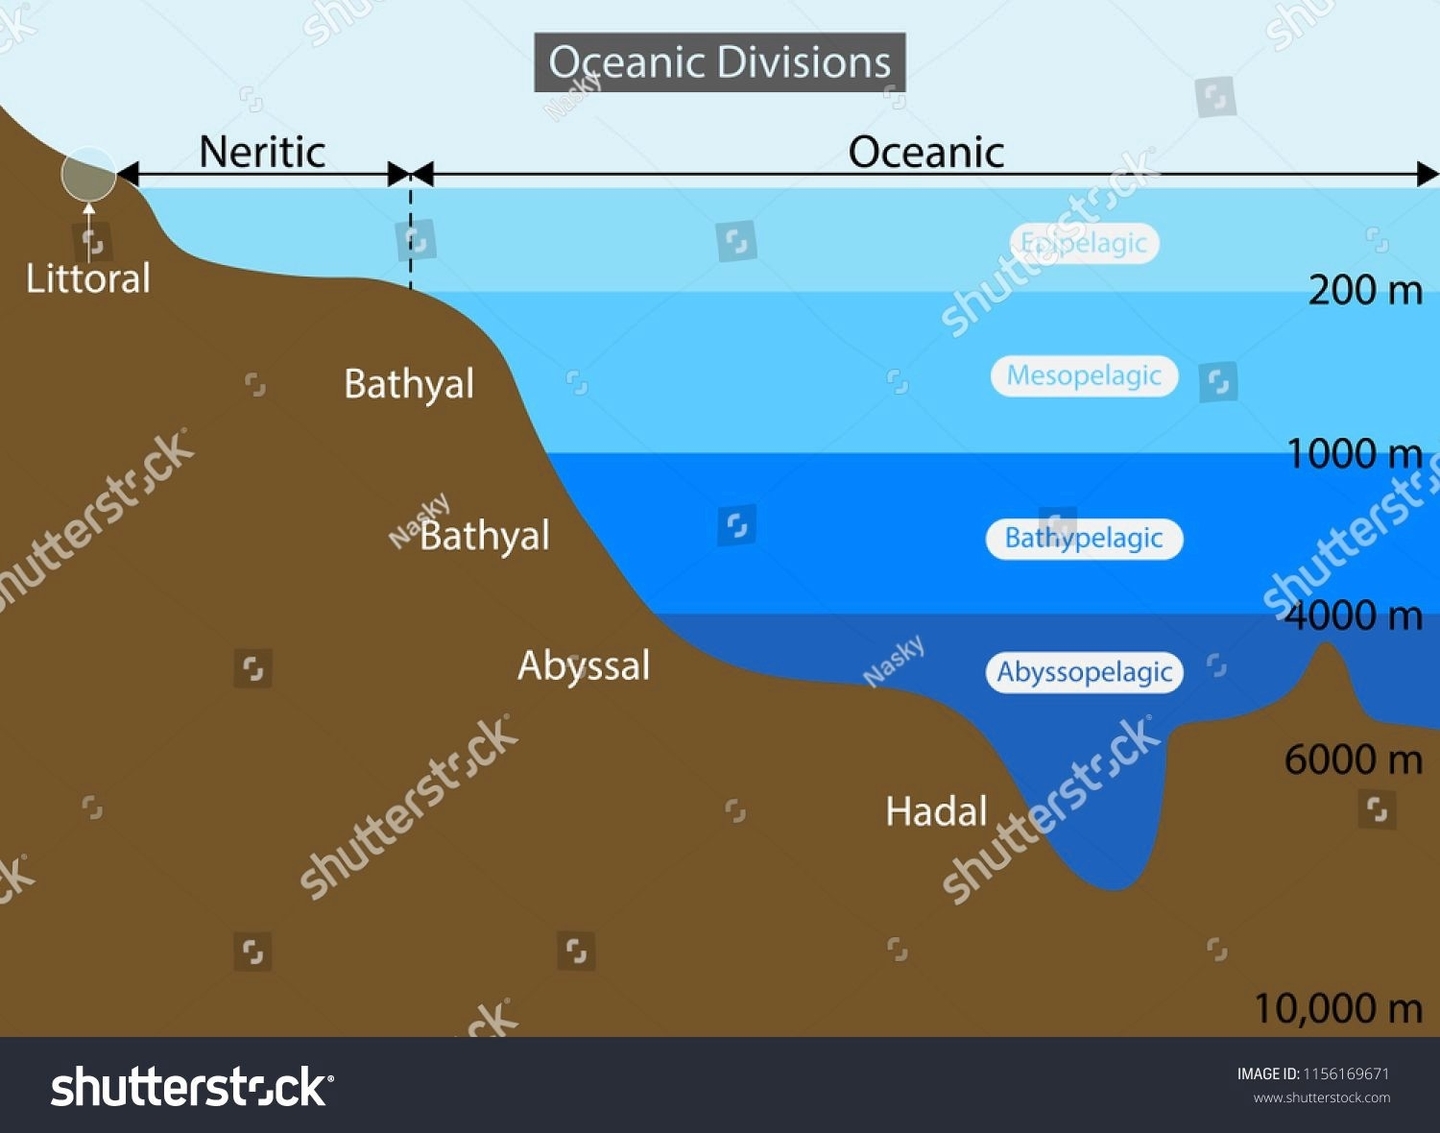 Ocean Earth Layers